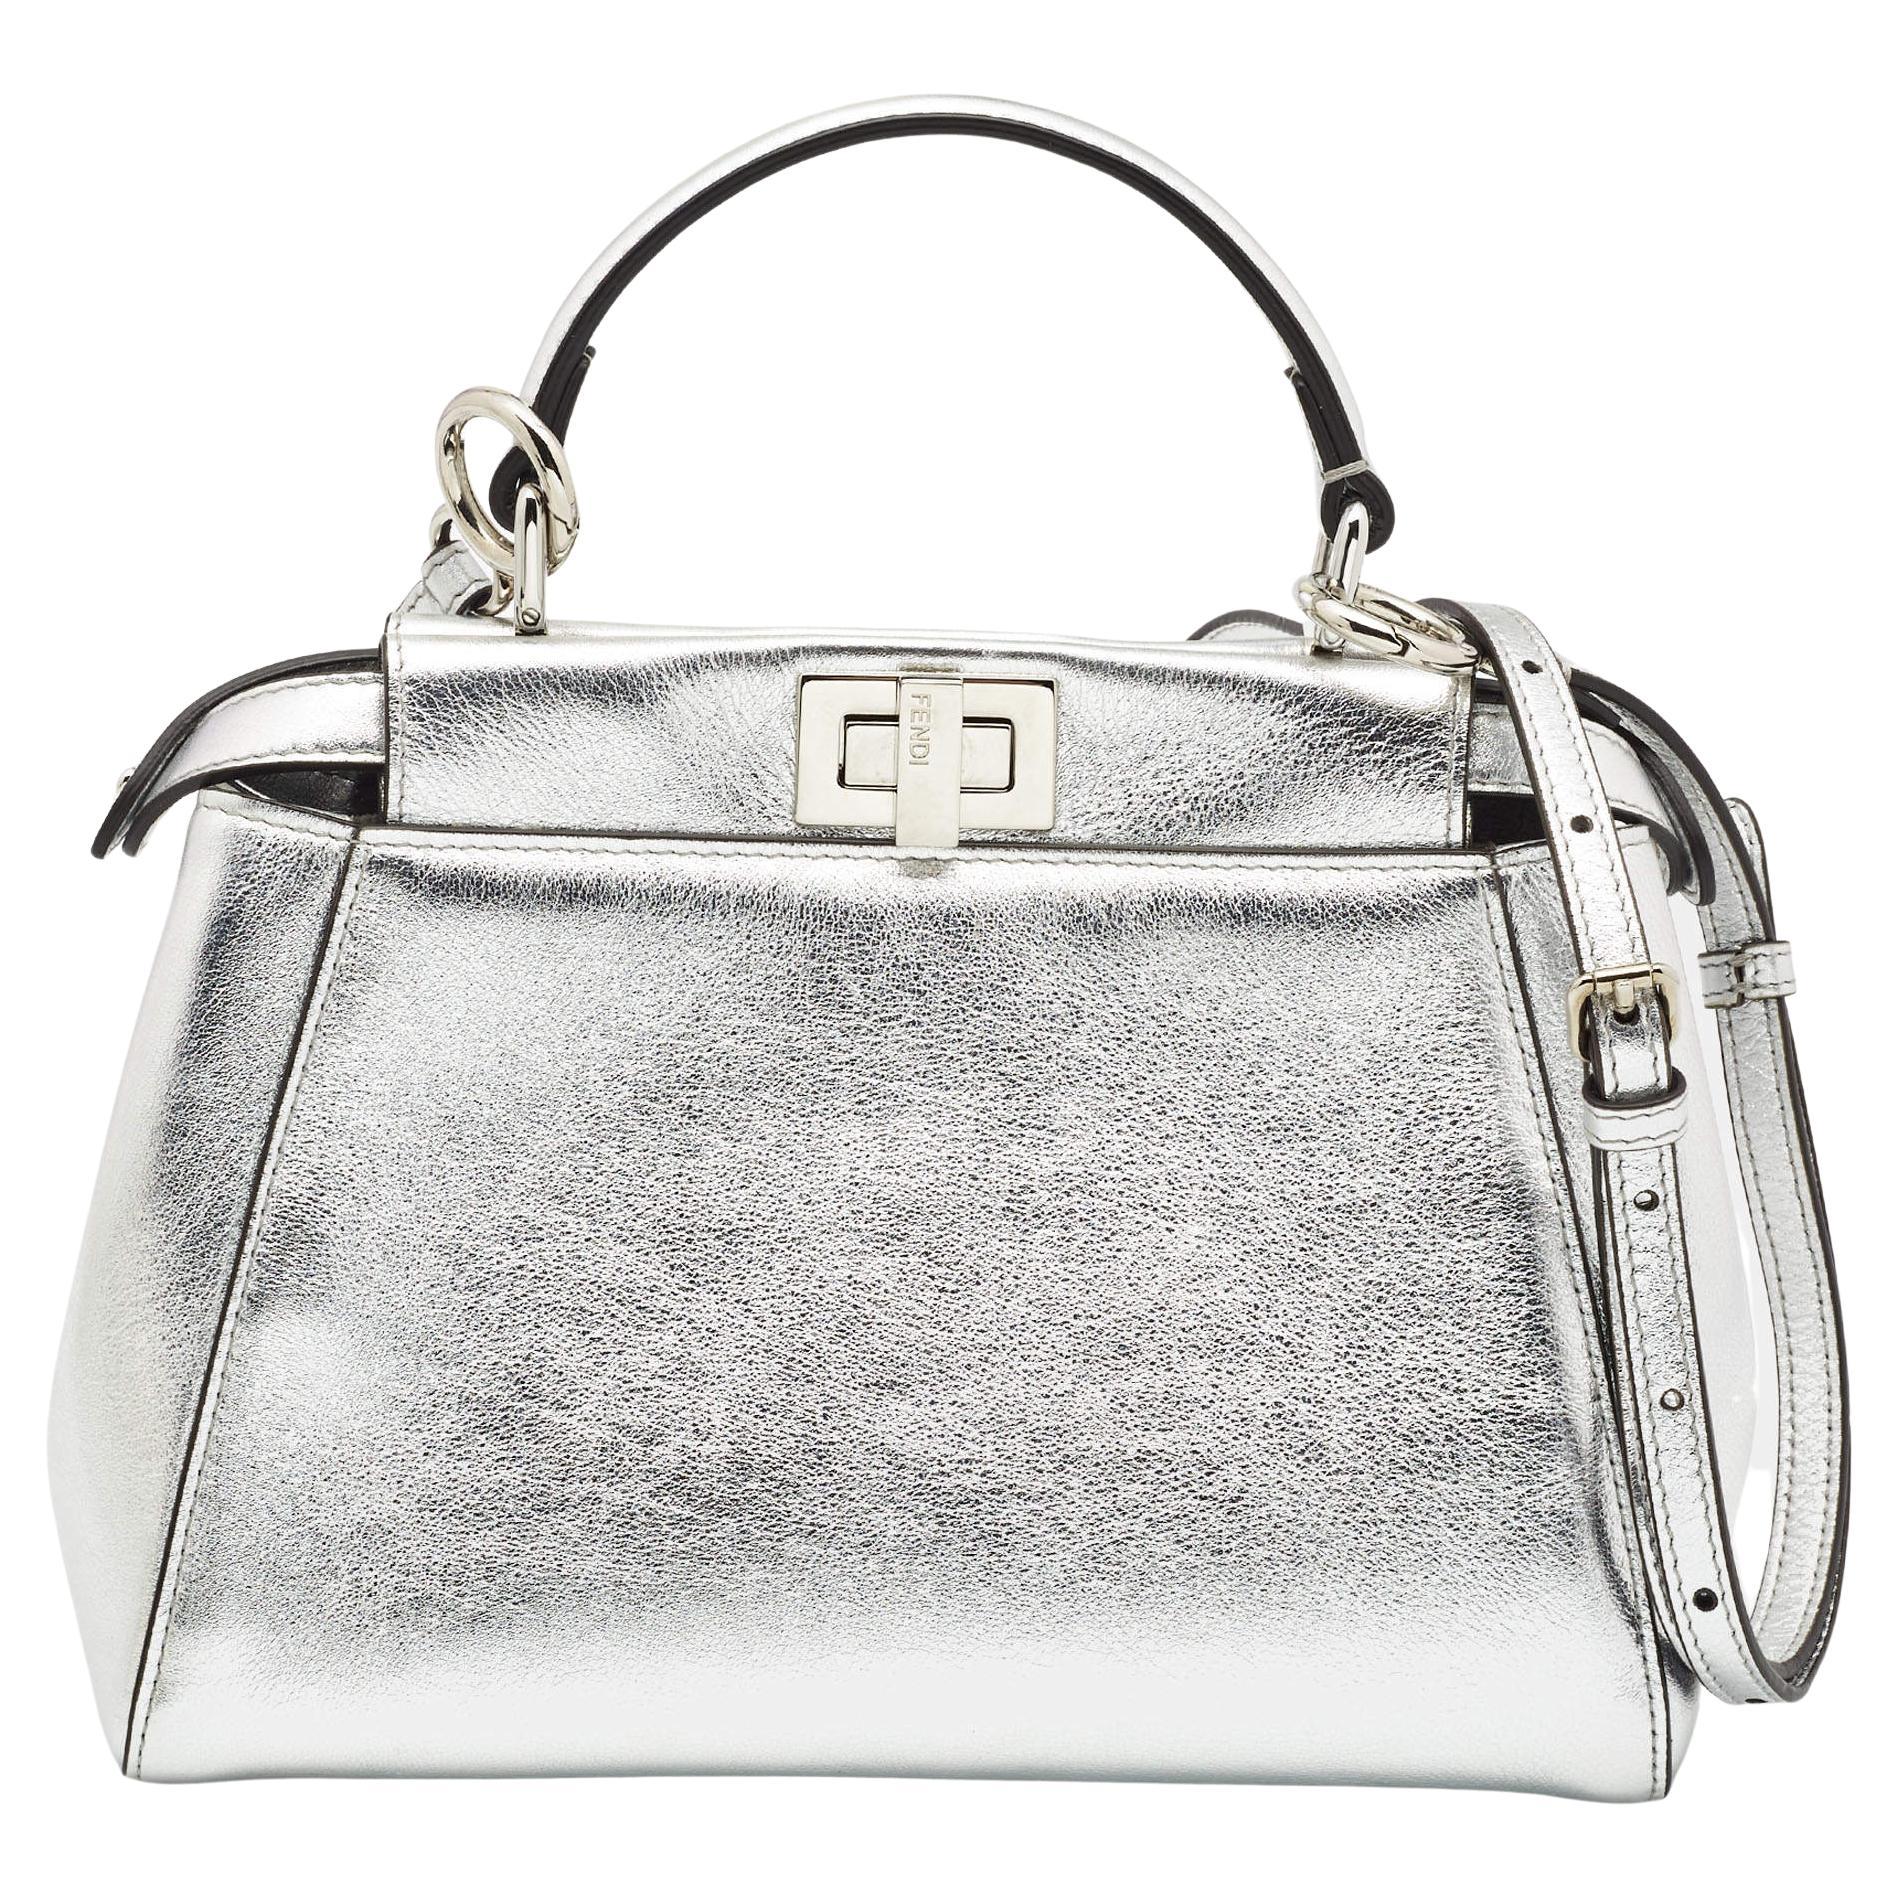 Fendi Silver Leather Mini Peekaboo Top Handle Bag